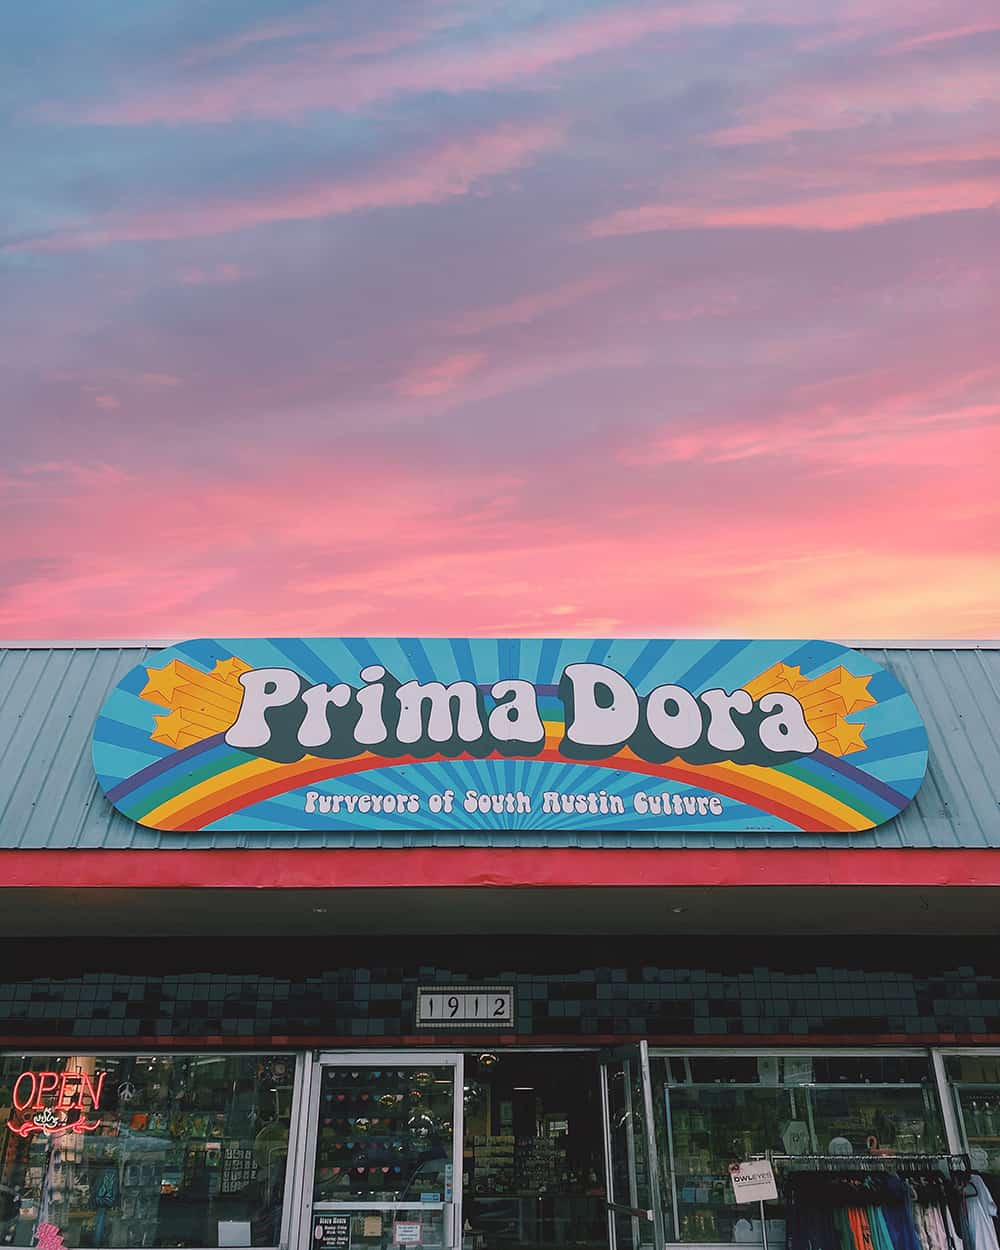 Prima Dora in Austin Texas